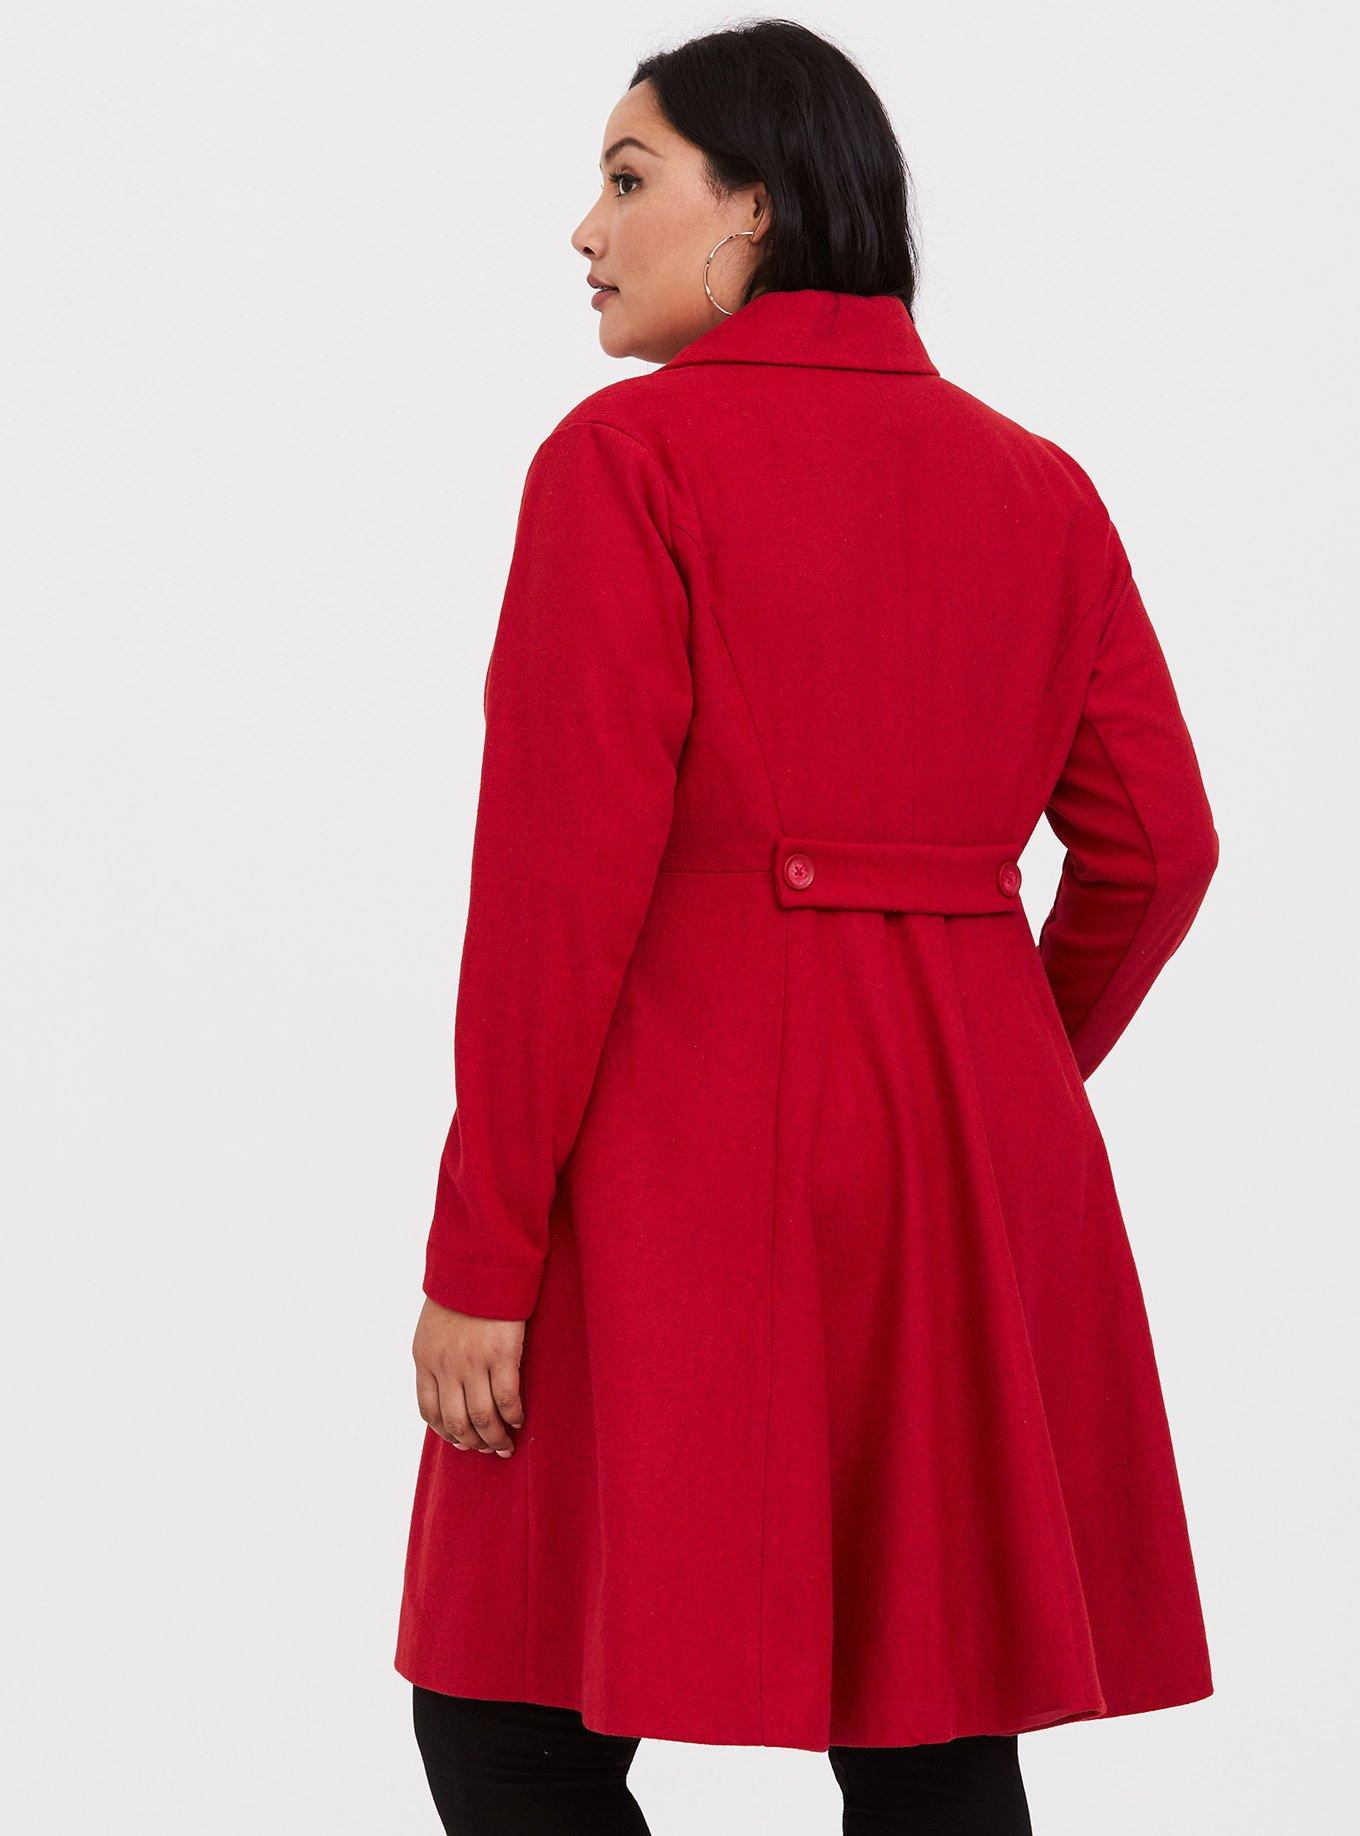 Plus Size - Marsala Red Faux Suede Drape Front Jacket - Torrid